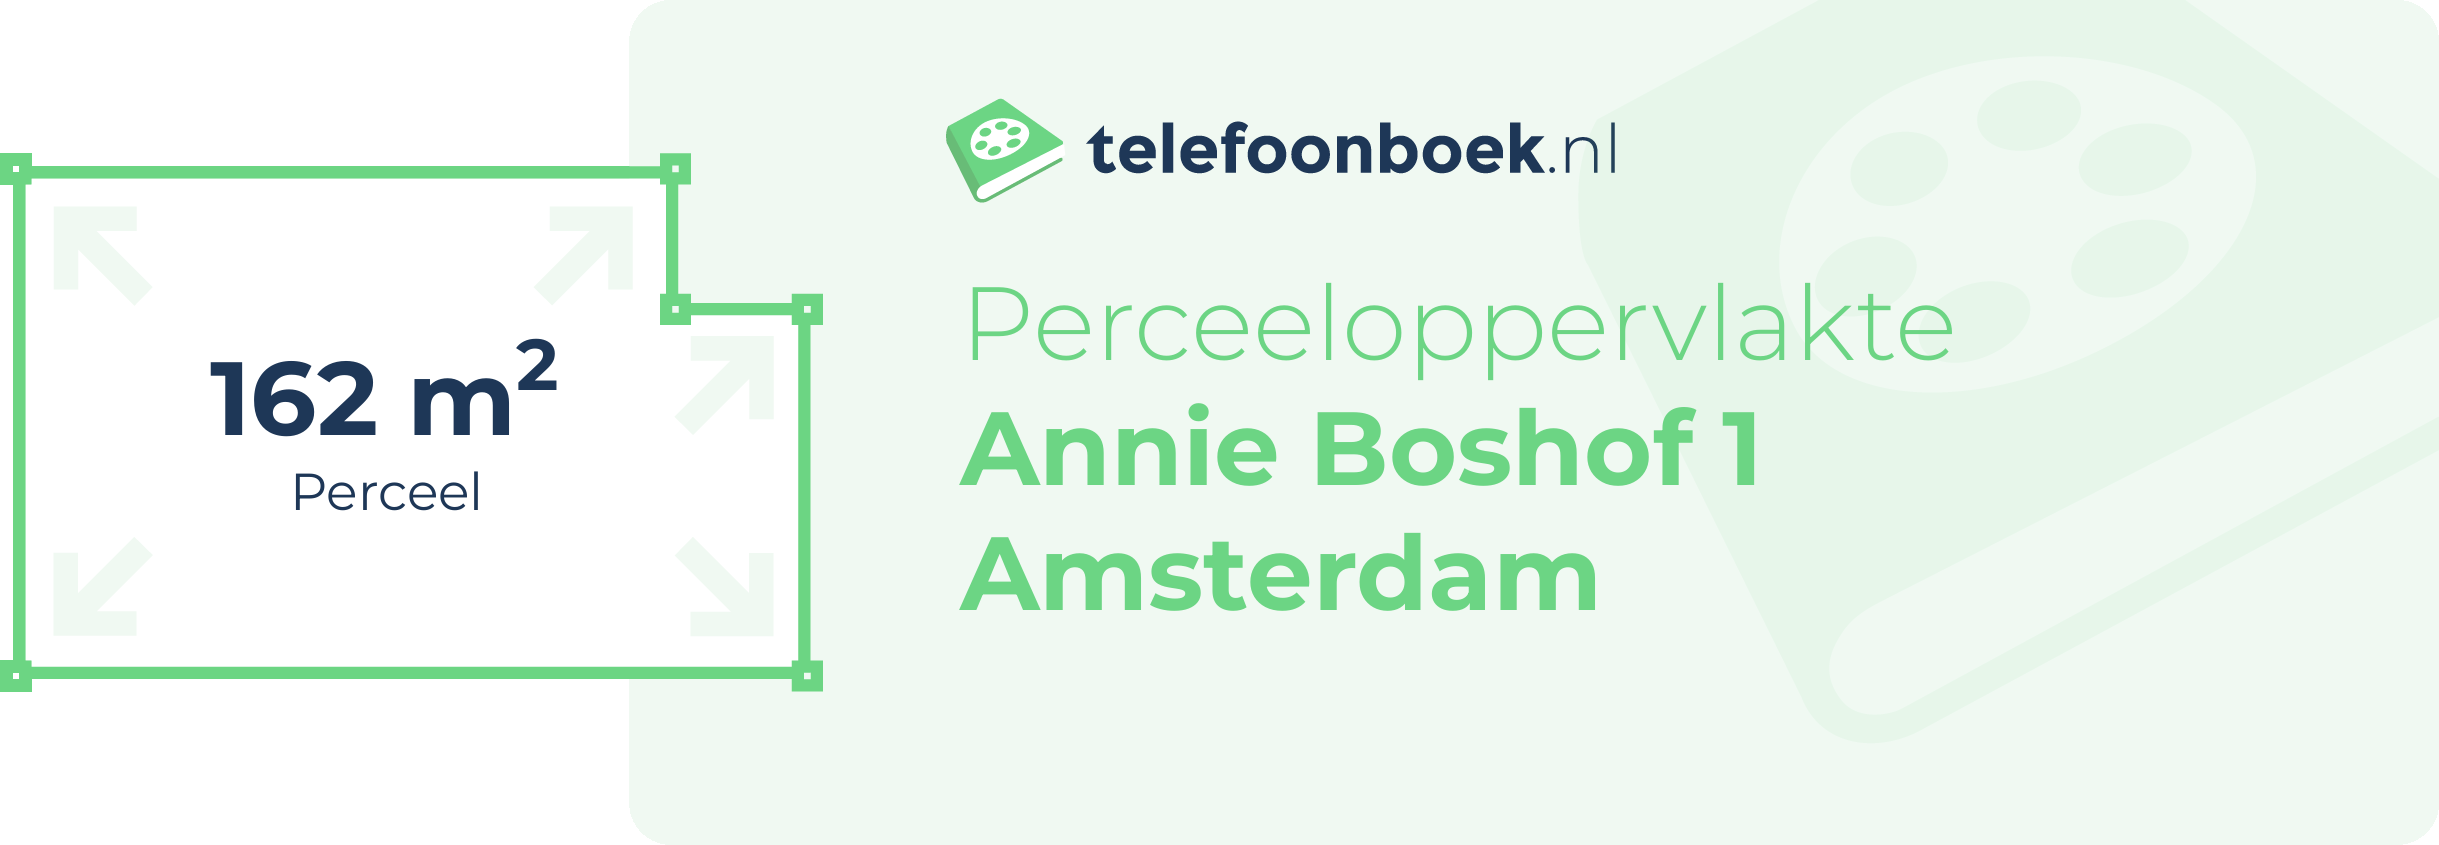 Perceeloppervlakte Annie Boshof 1 Amsterdam